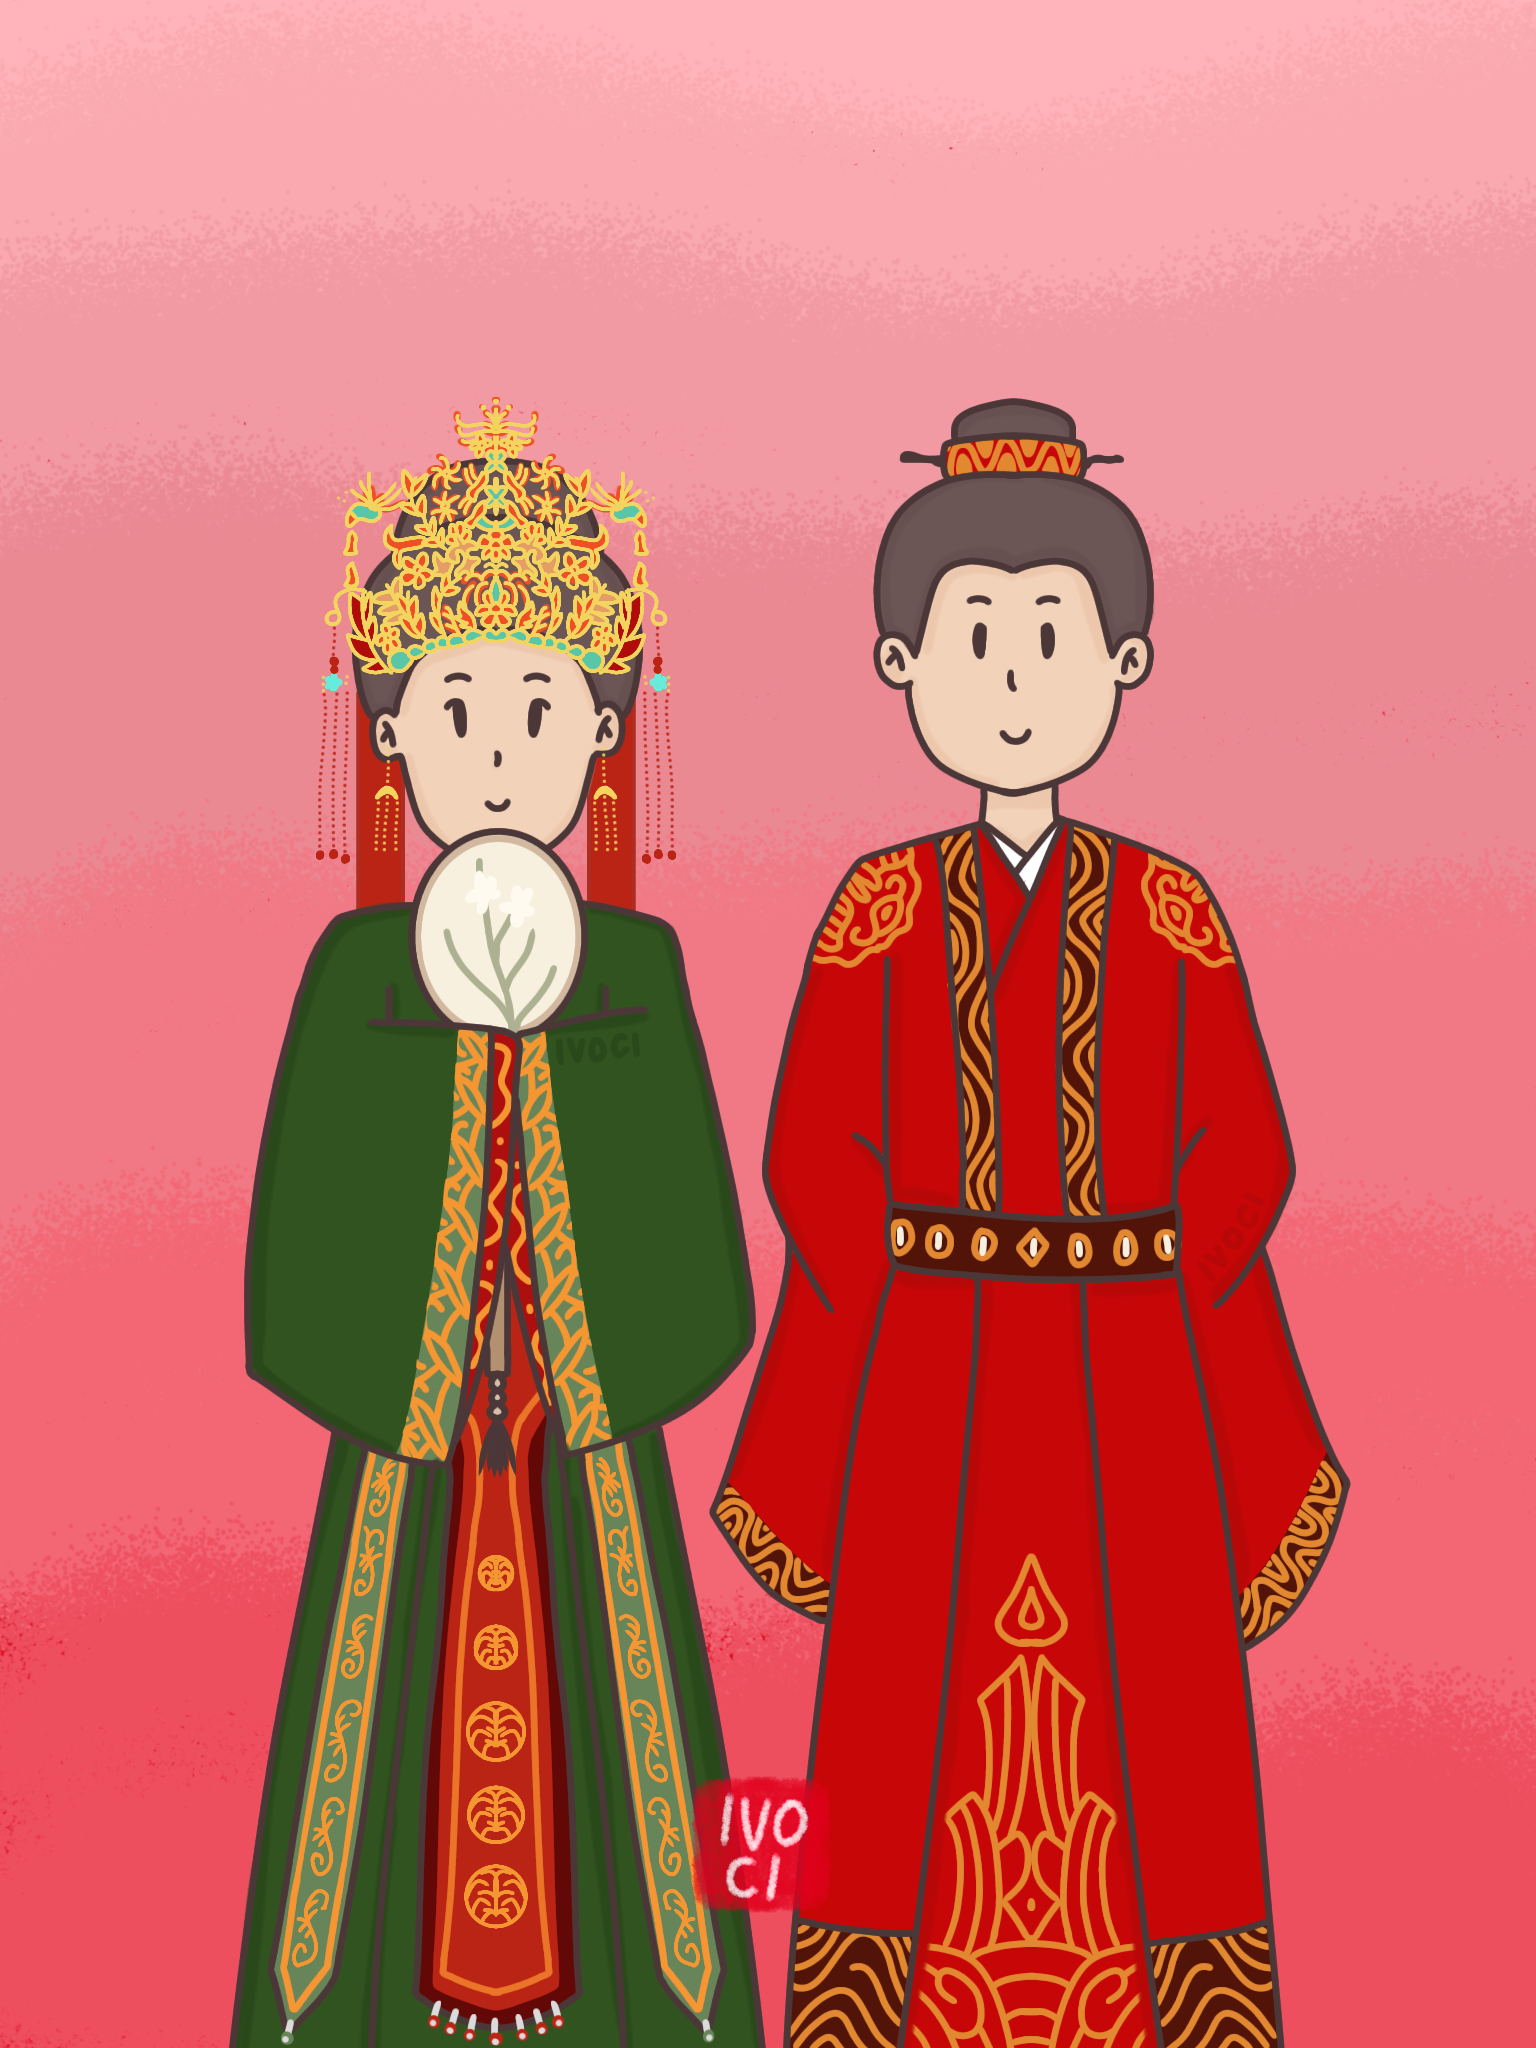 ivoci - "The Story of Minglan 知否知否应是绿肥红瘦" Hanfu Wedding Dress Fan Art - 1